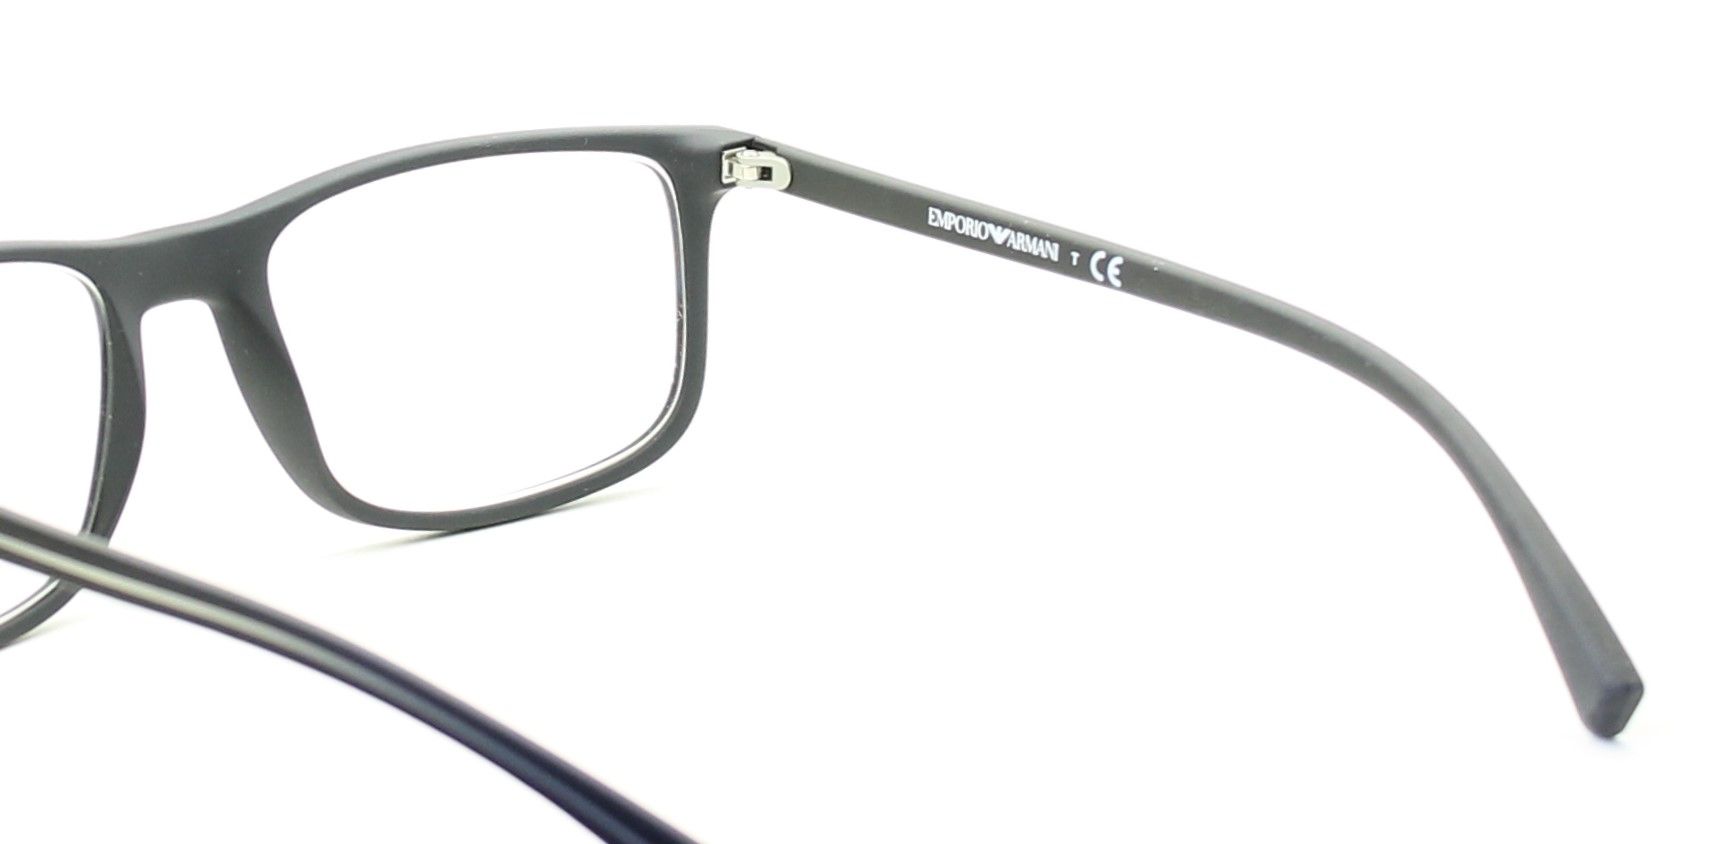 EMPORIO ARMANI EA3135 5063 53mm Eyewear FRAMES RX Optical Glasses